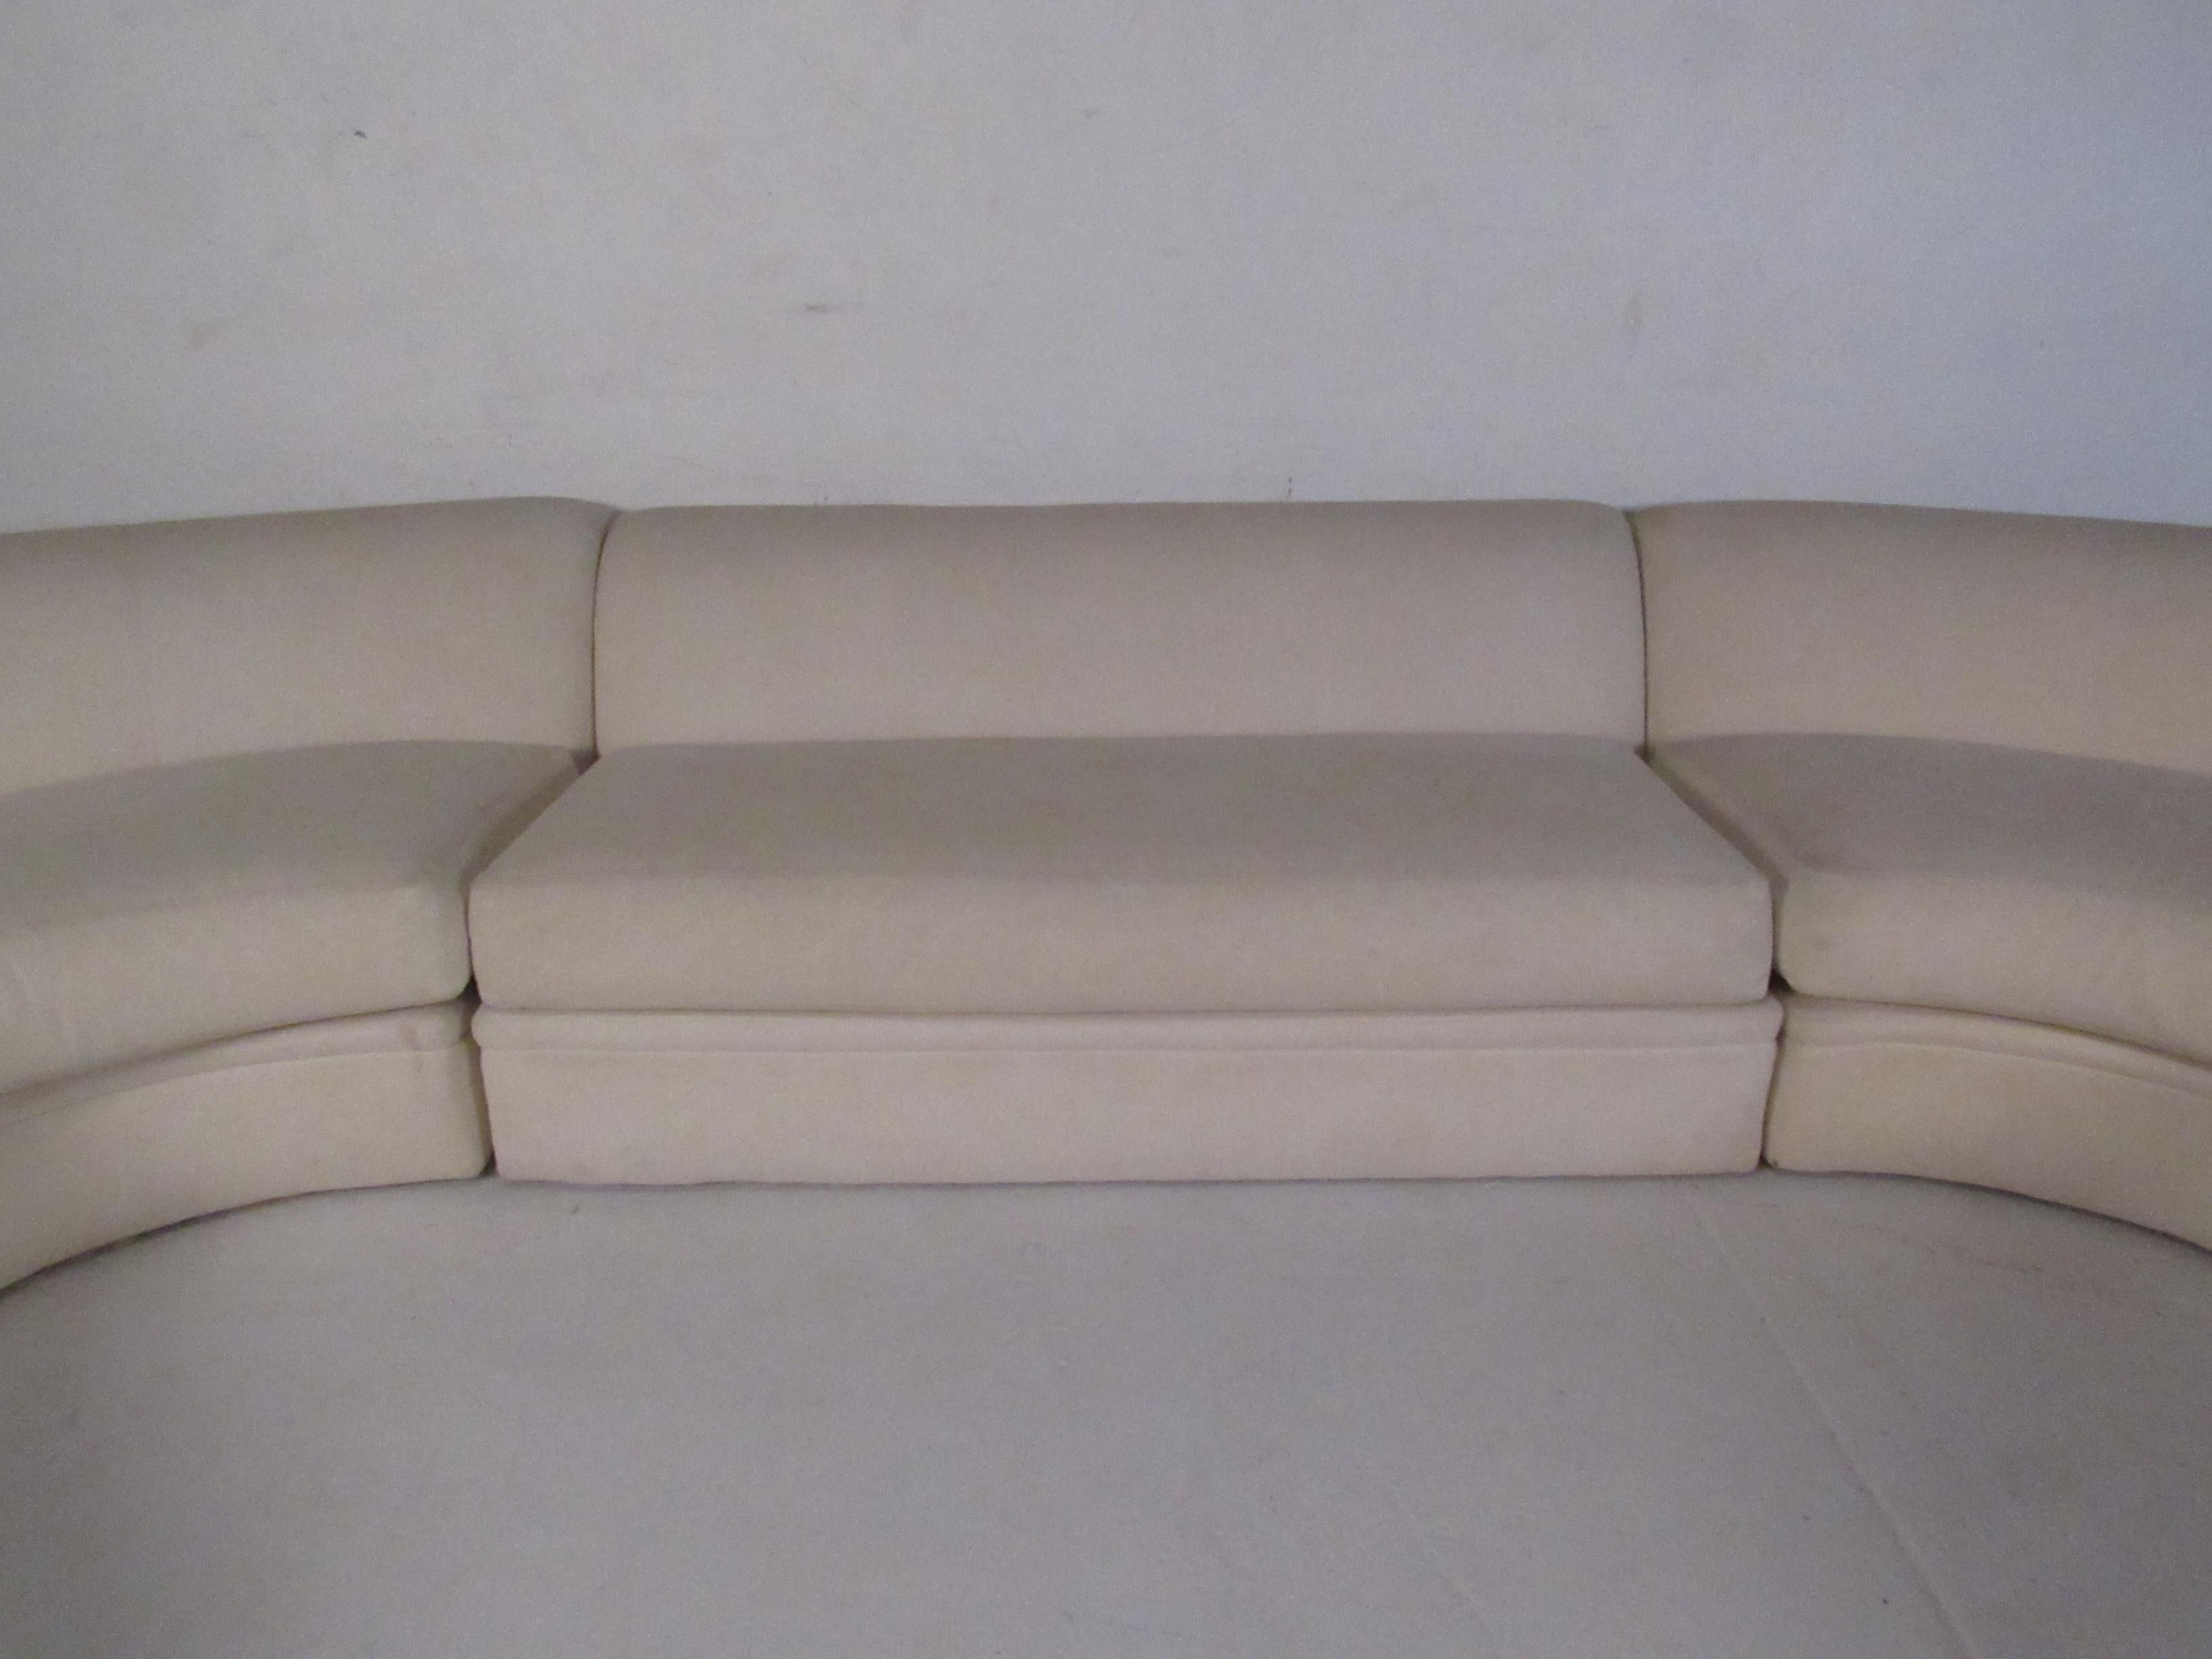 Upholstery Vladimir Kagan Sectional Sofa by Directional